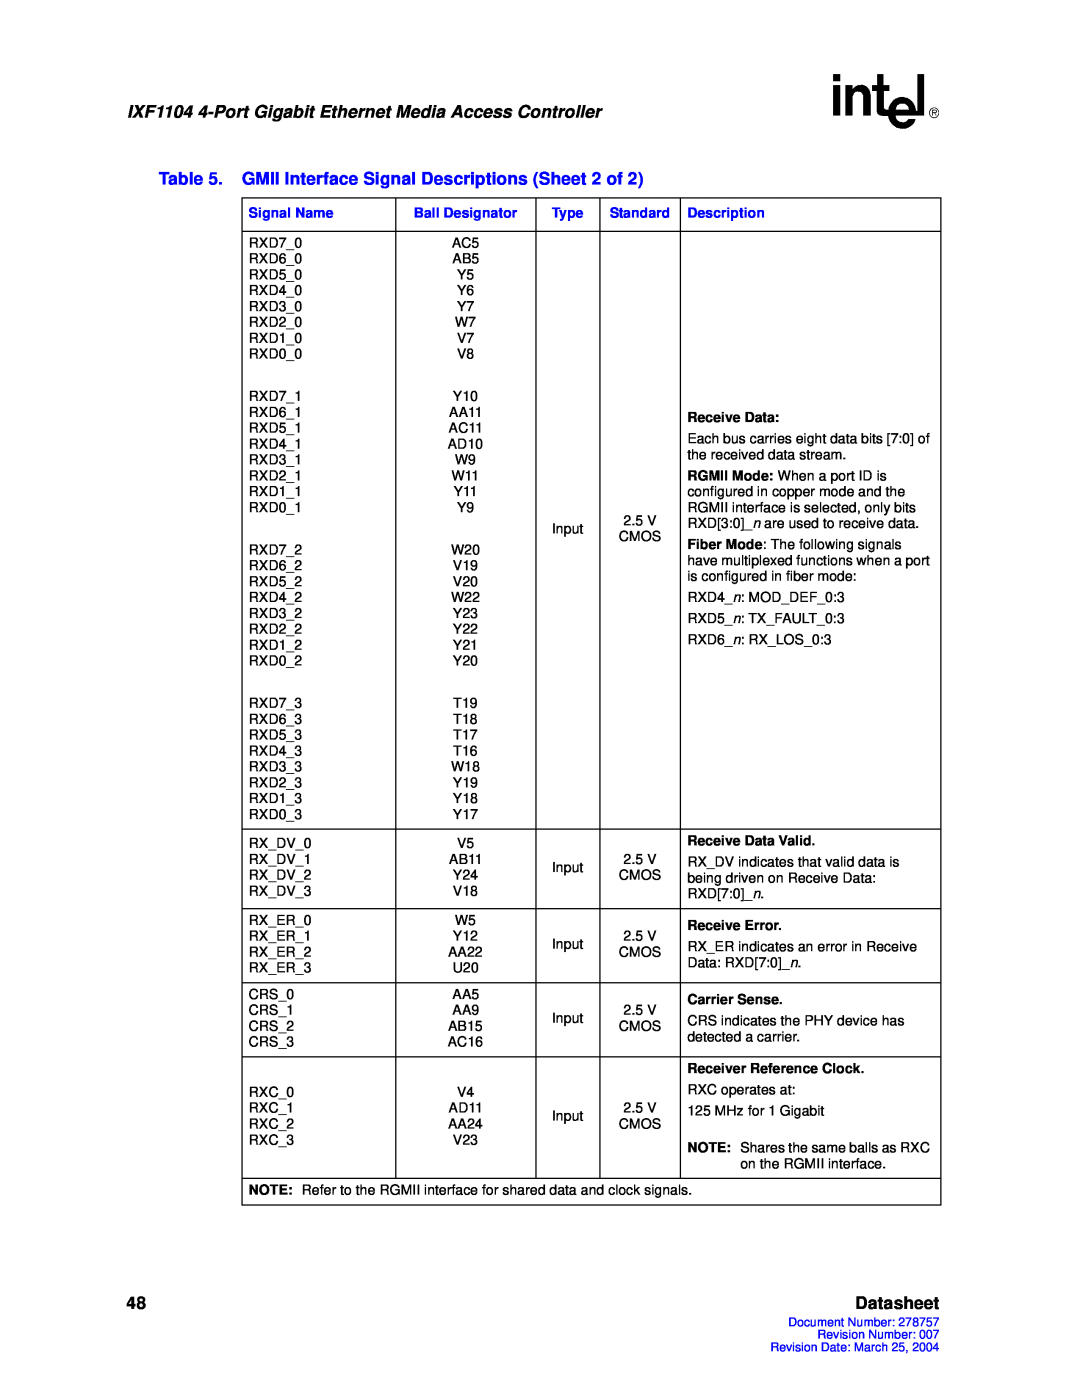 Intel IXF1104 manual Datasheet, Receive Data Valid, Receive Error, Carrier Sense, Receiver Reference Clock 